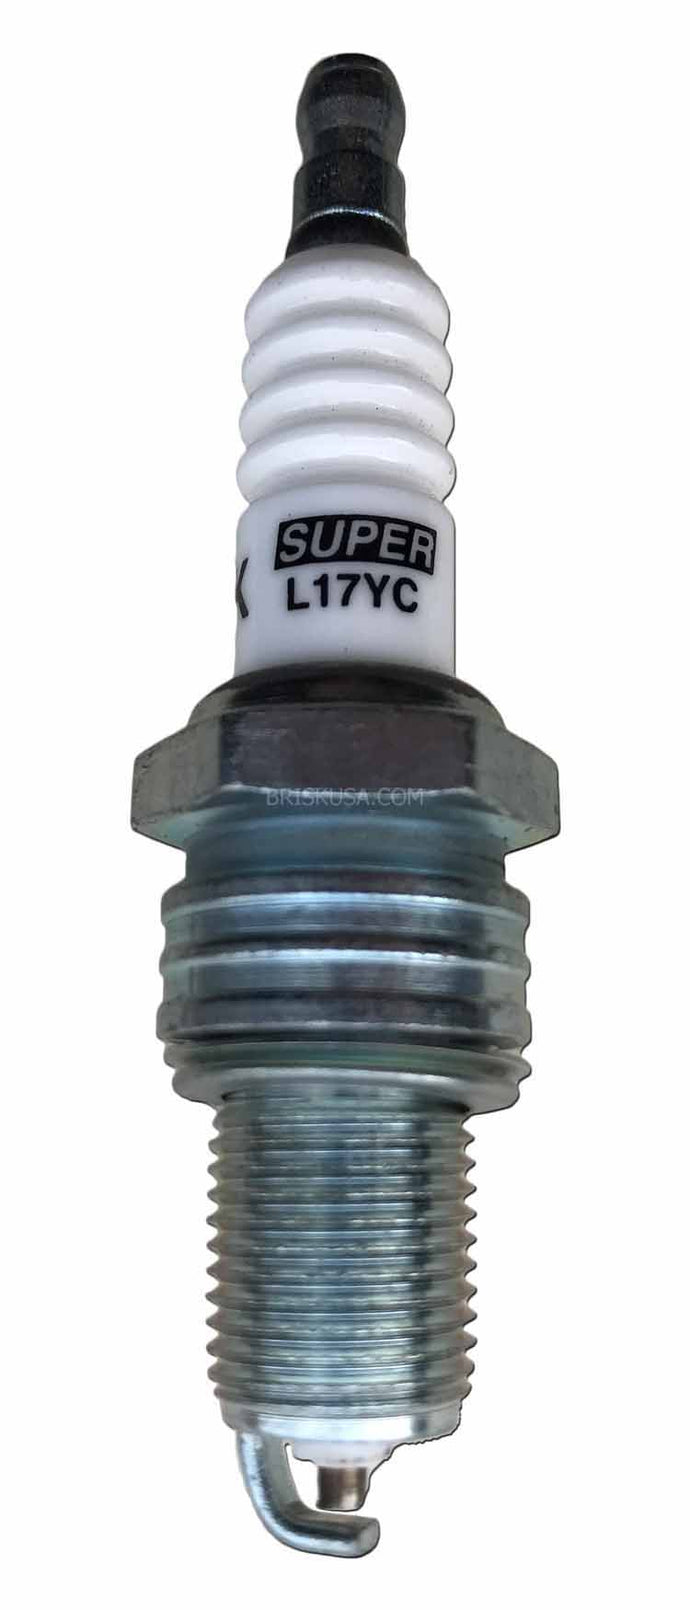 Super Racing L17YC-1 Spark Plug